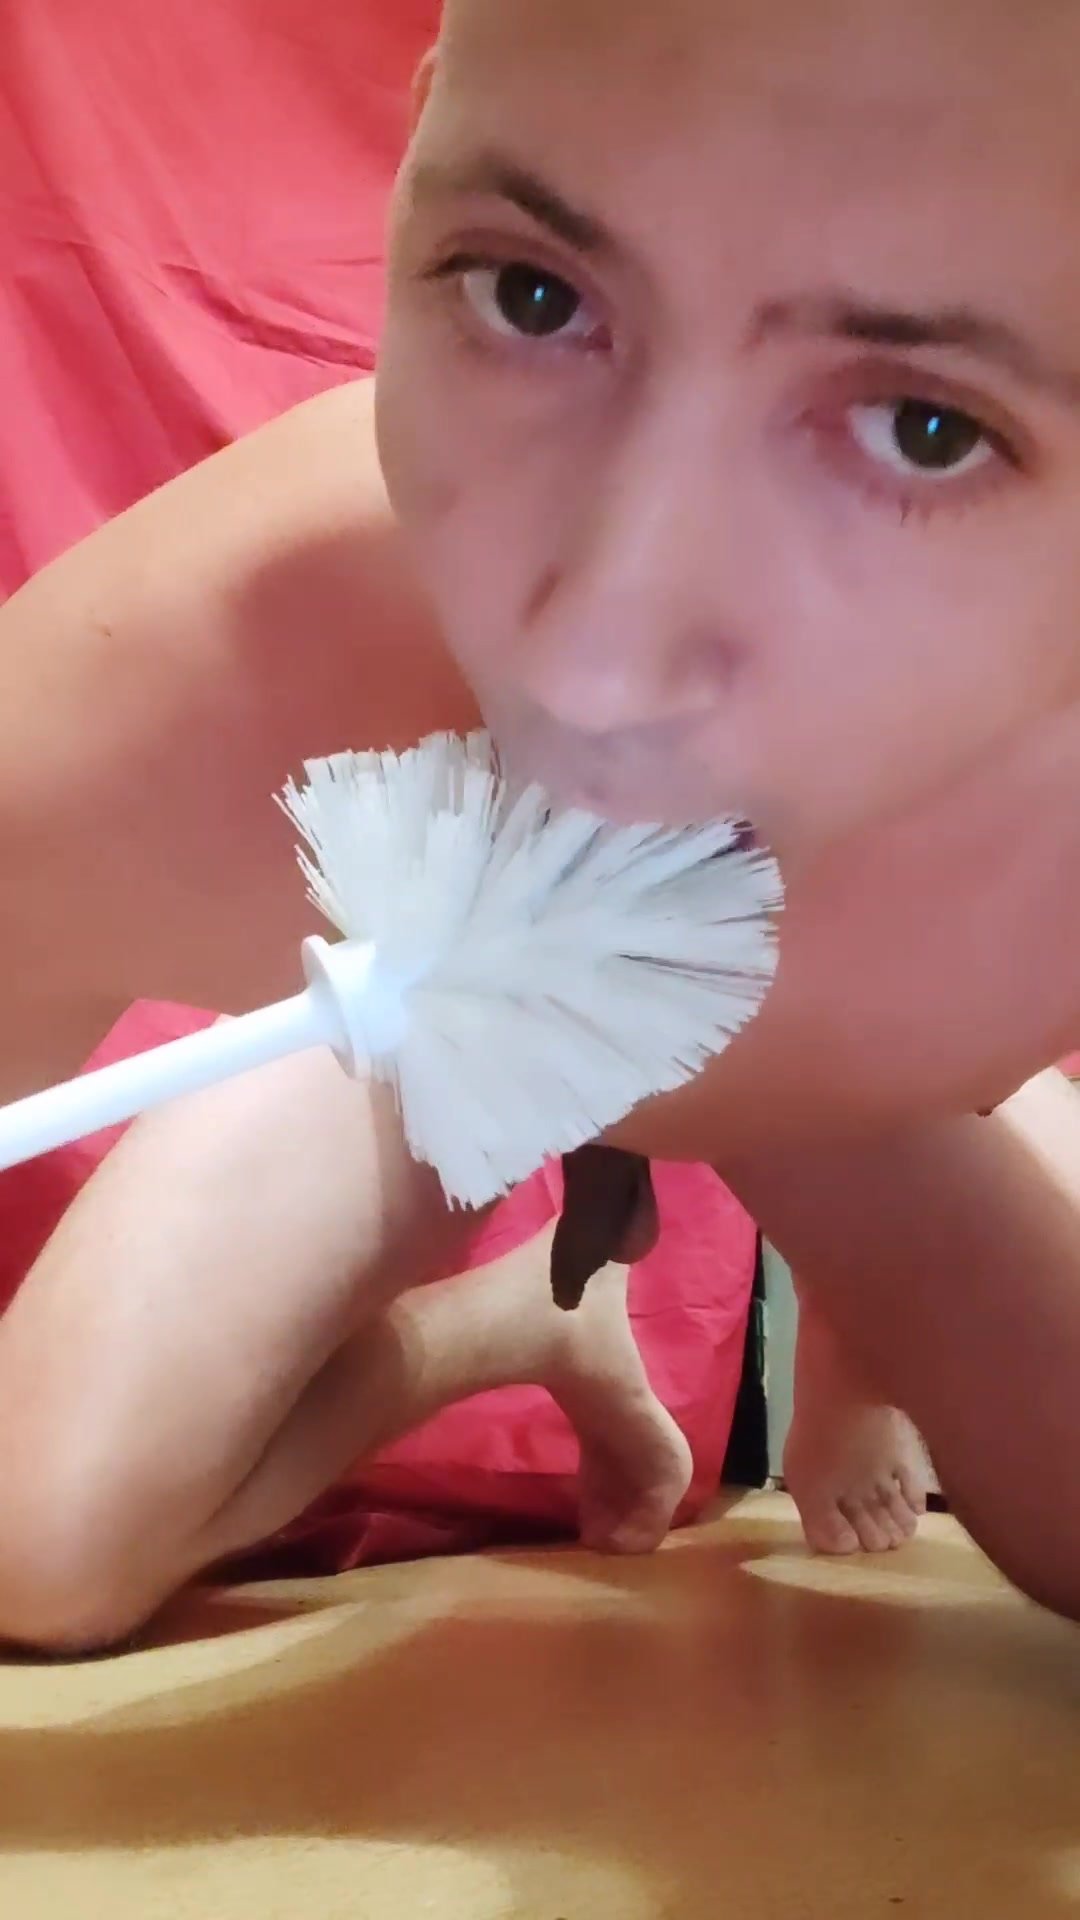 fag loser lick toilet brush